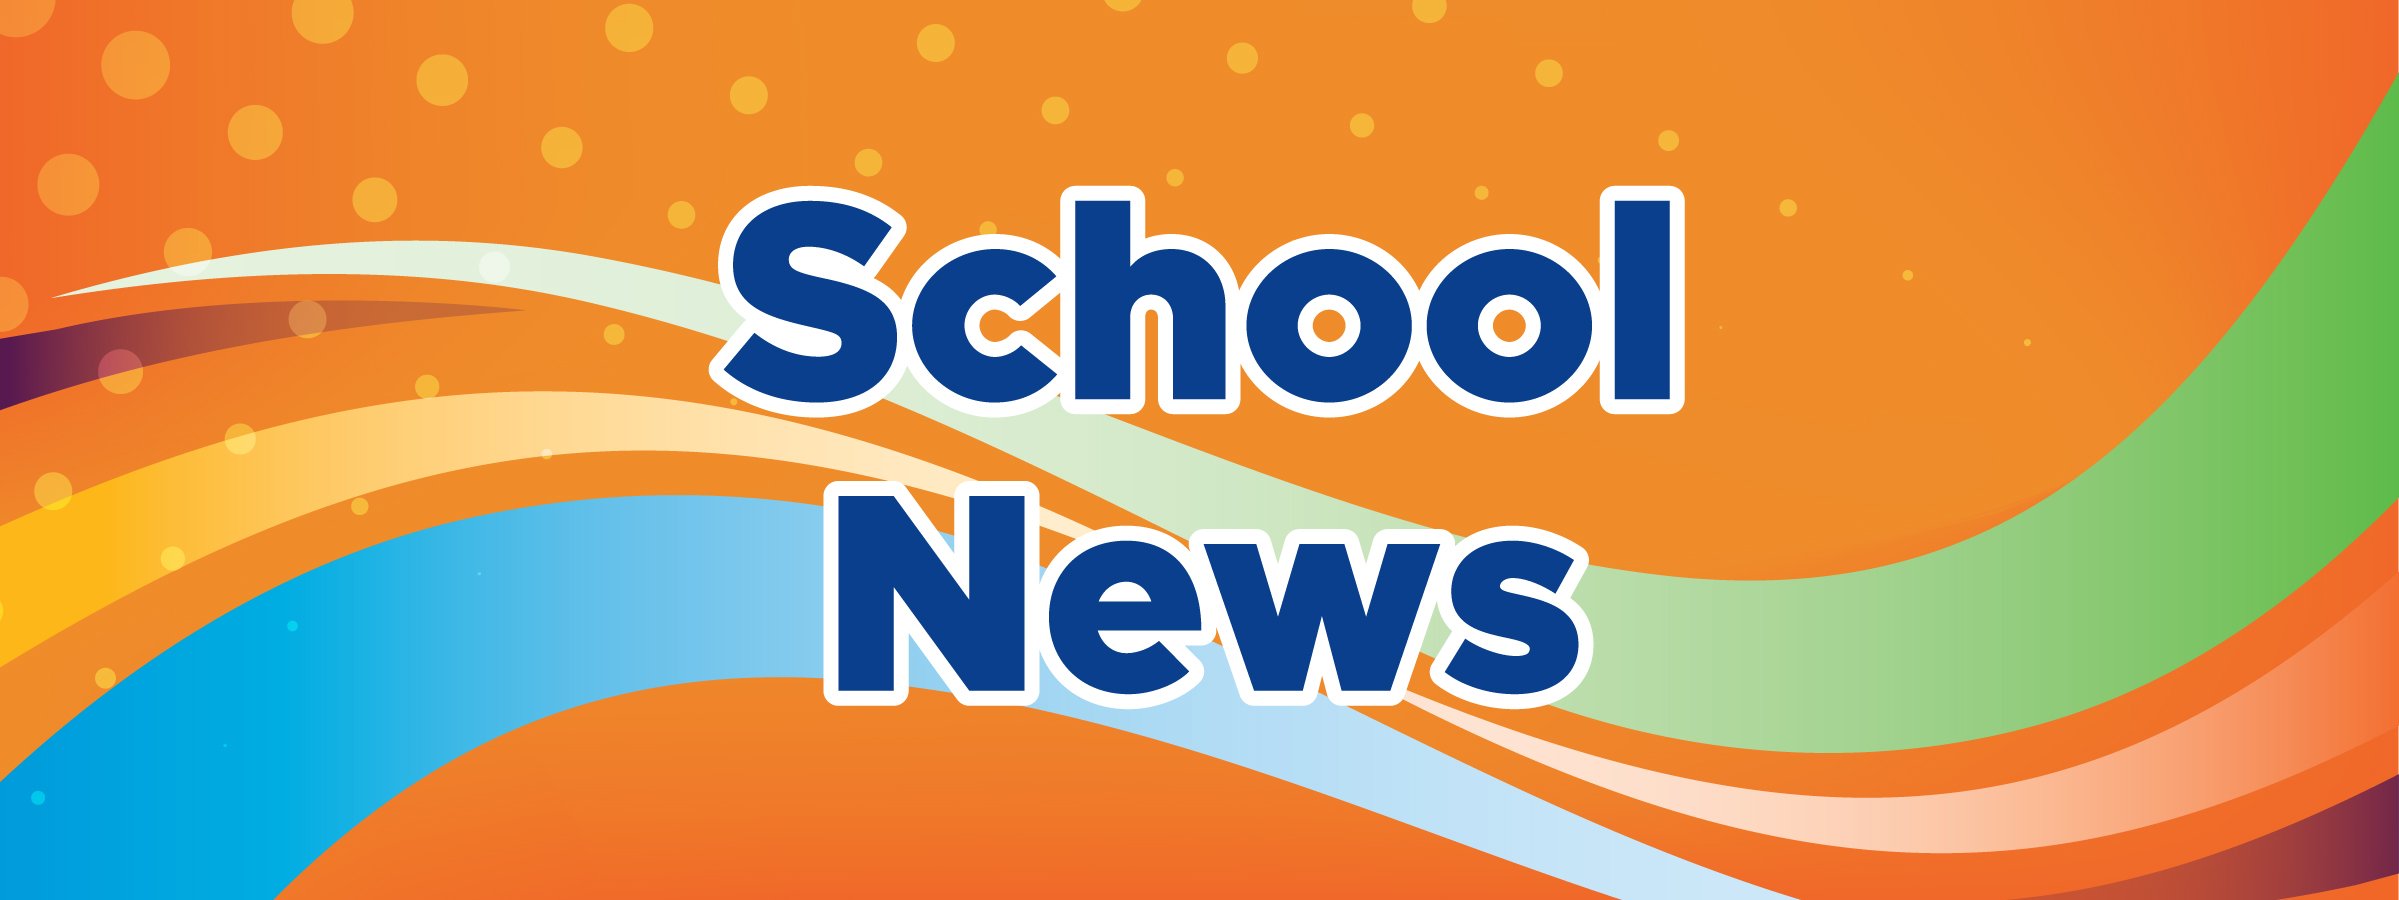 School news banner image